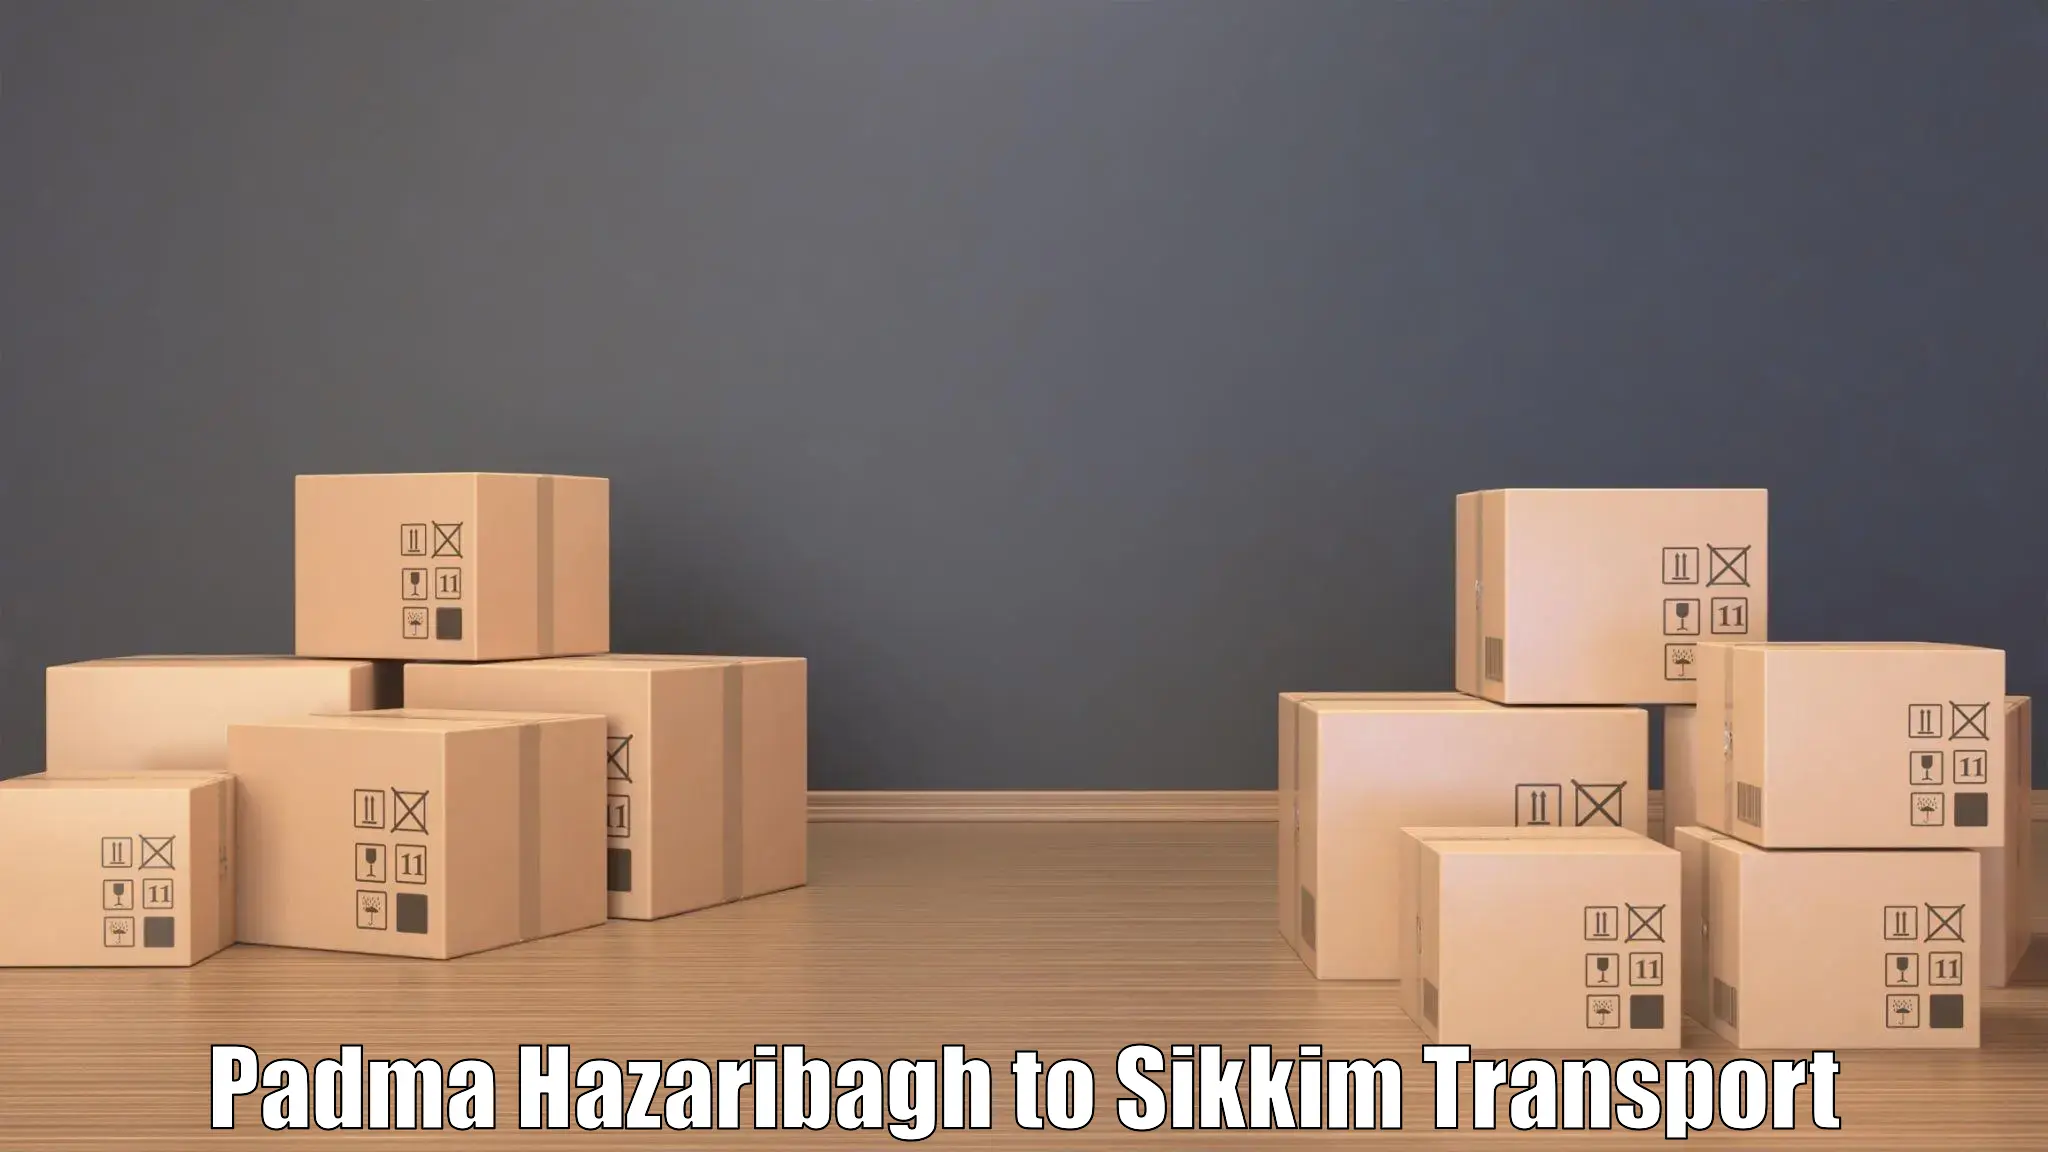 Transport in sharing Padma Hazaribagh to Rangpo